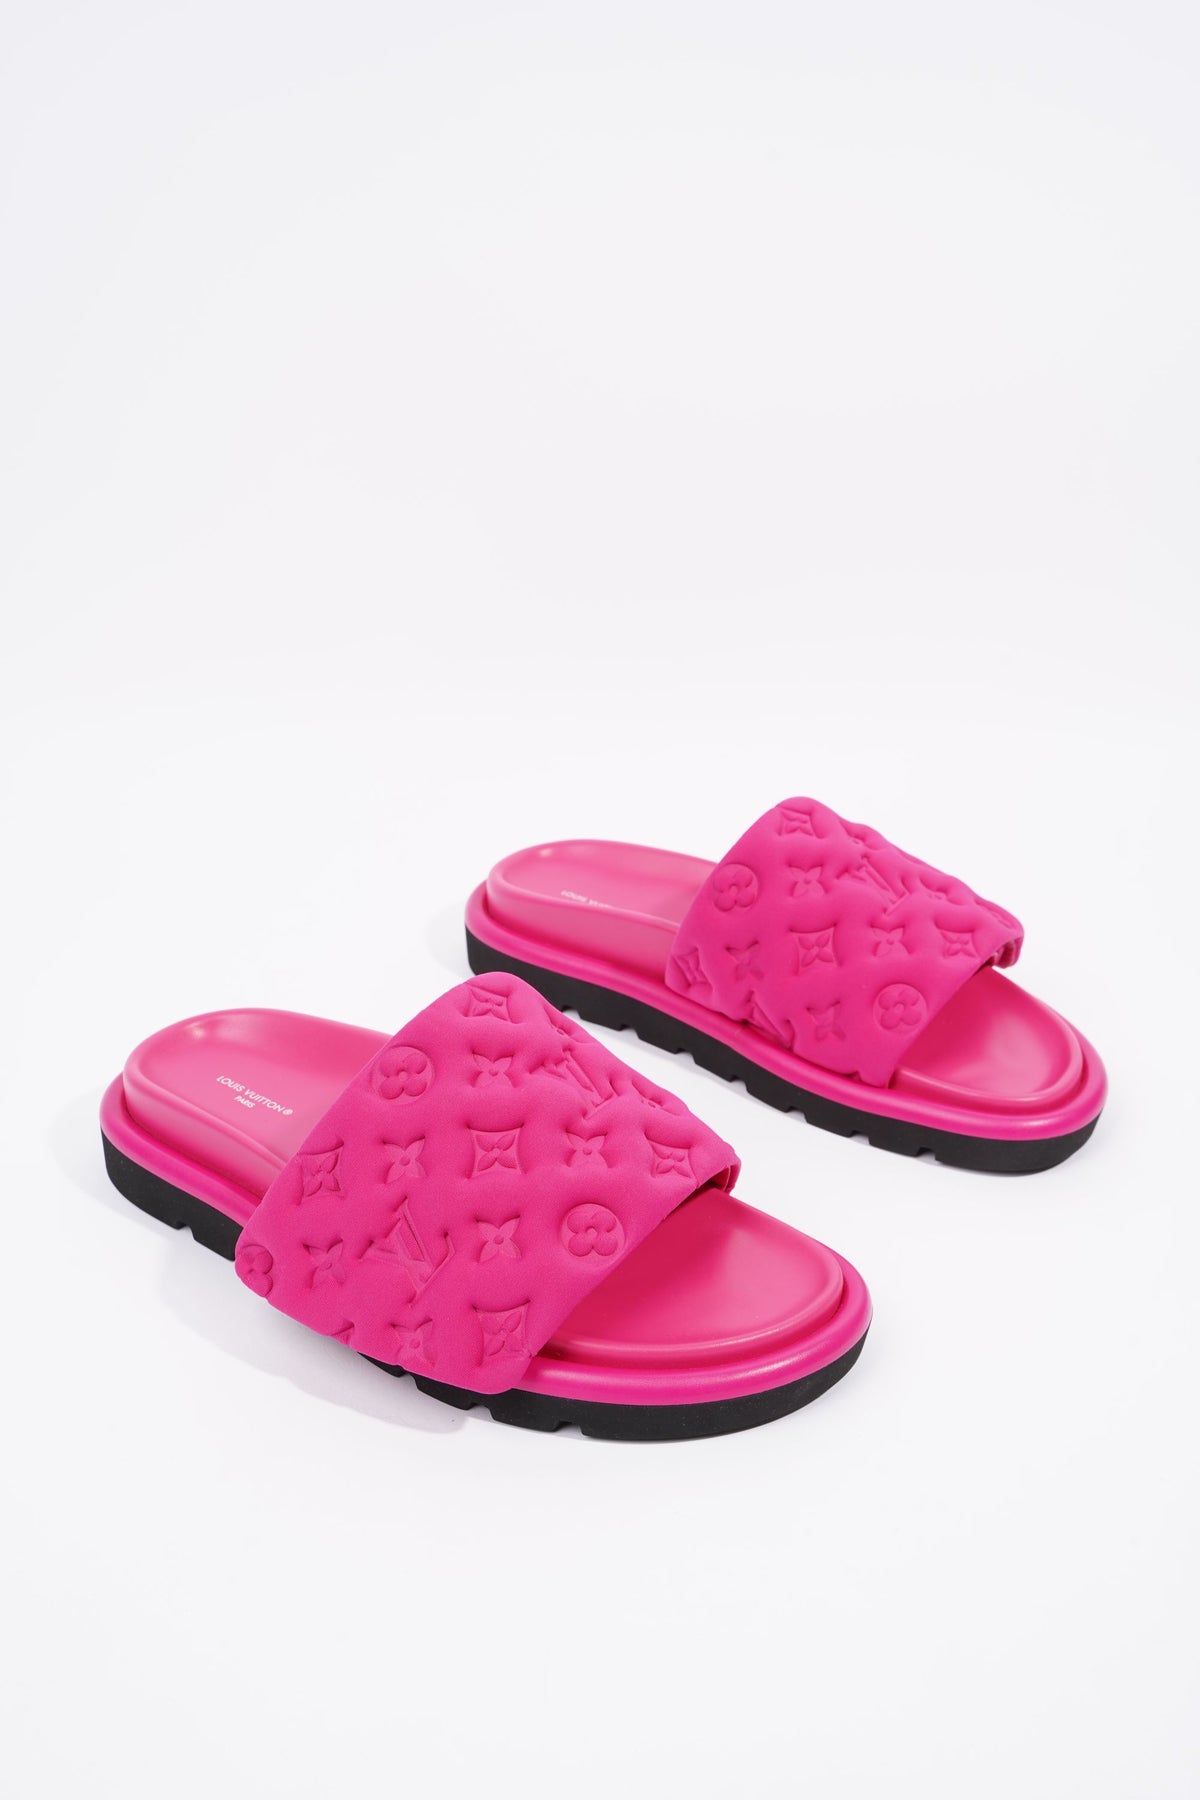 Pool pillow leather sandal Louis Vuitton Pink size 39 EU in